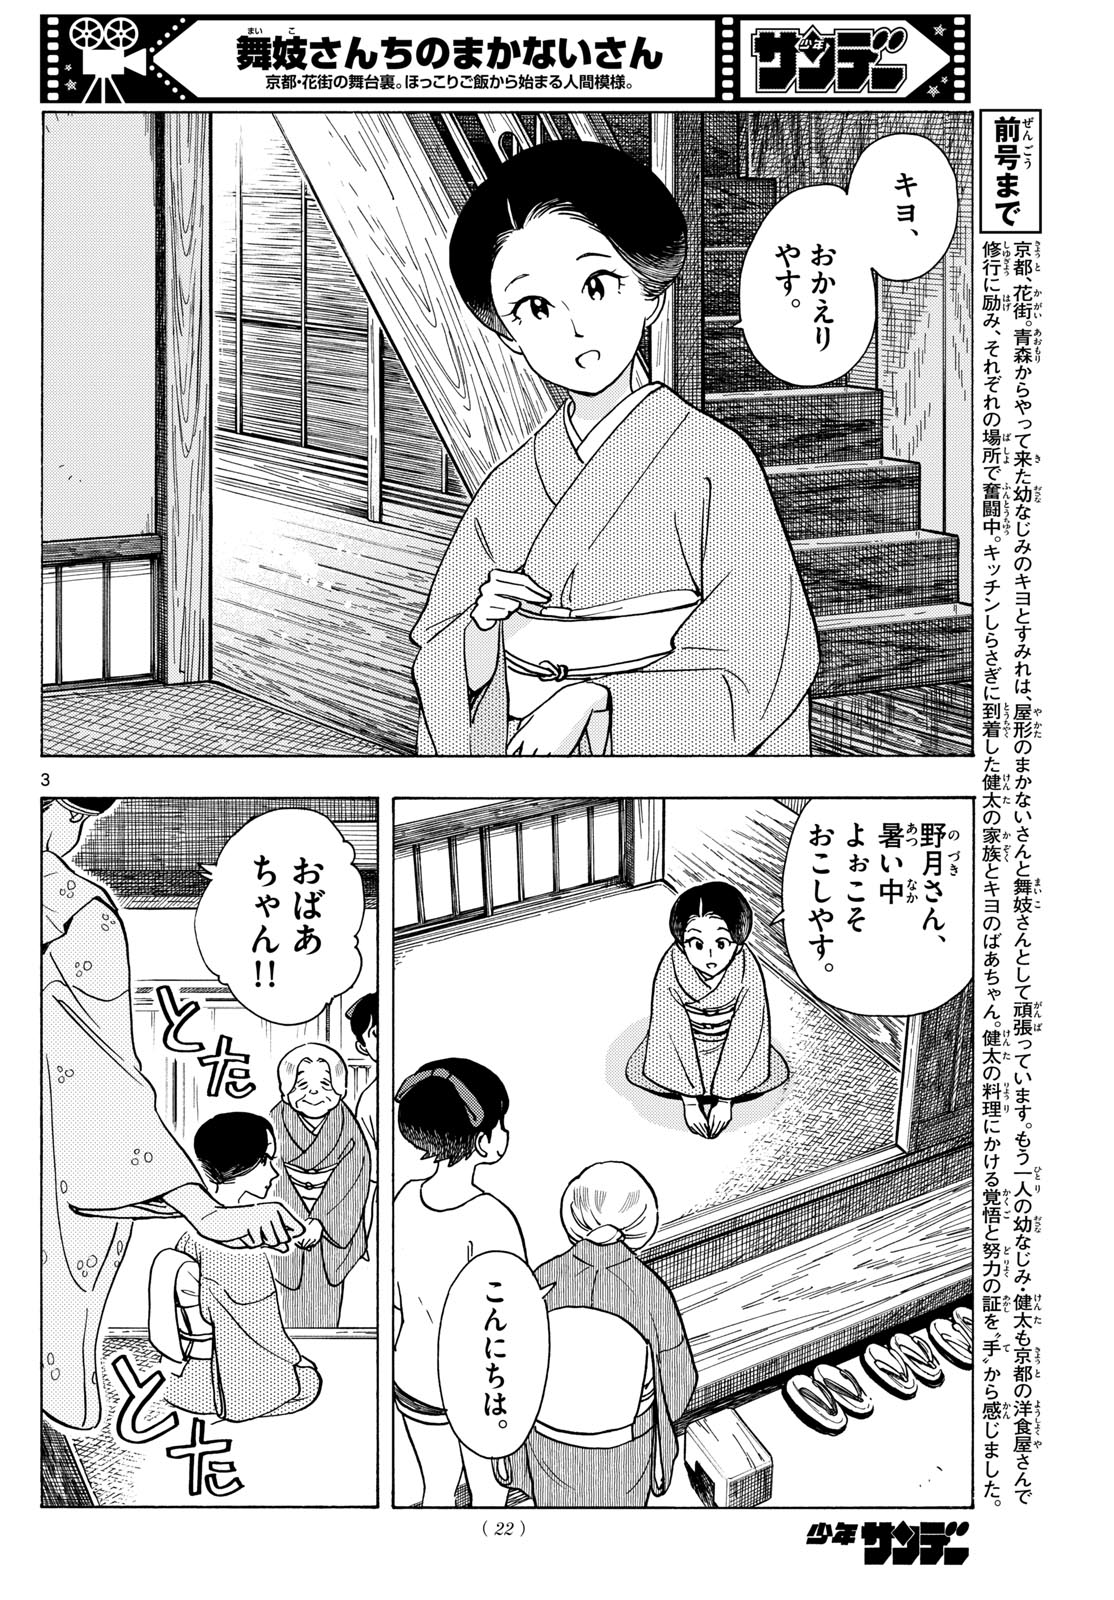 Maiko-san Chi no Makanai-san - Chapter 303 - Page 3